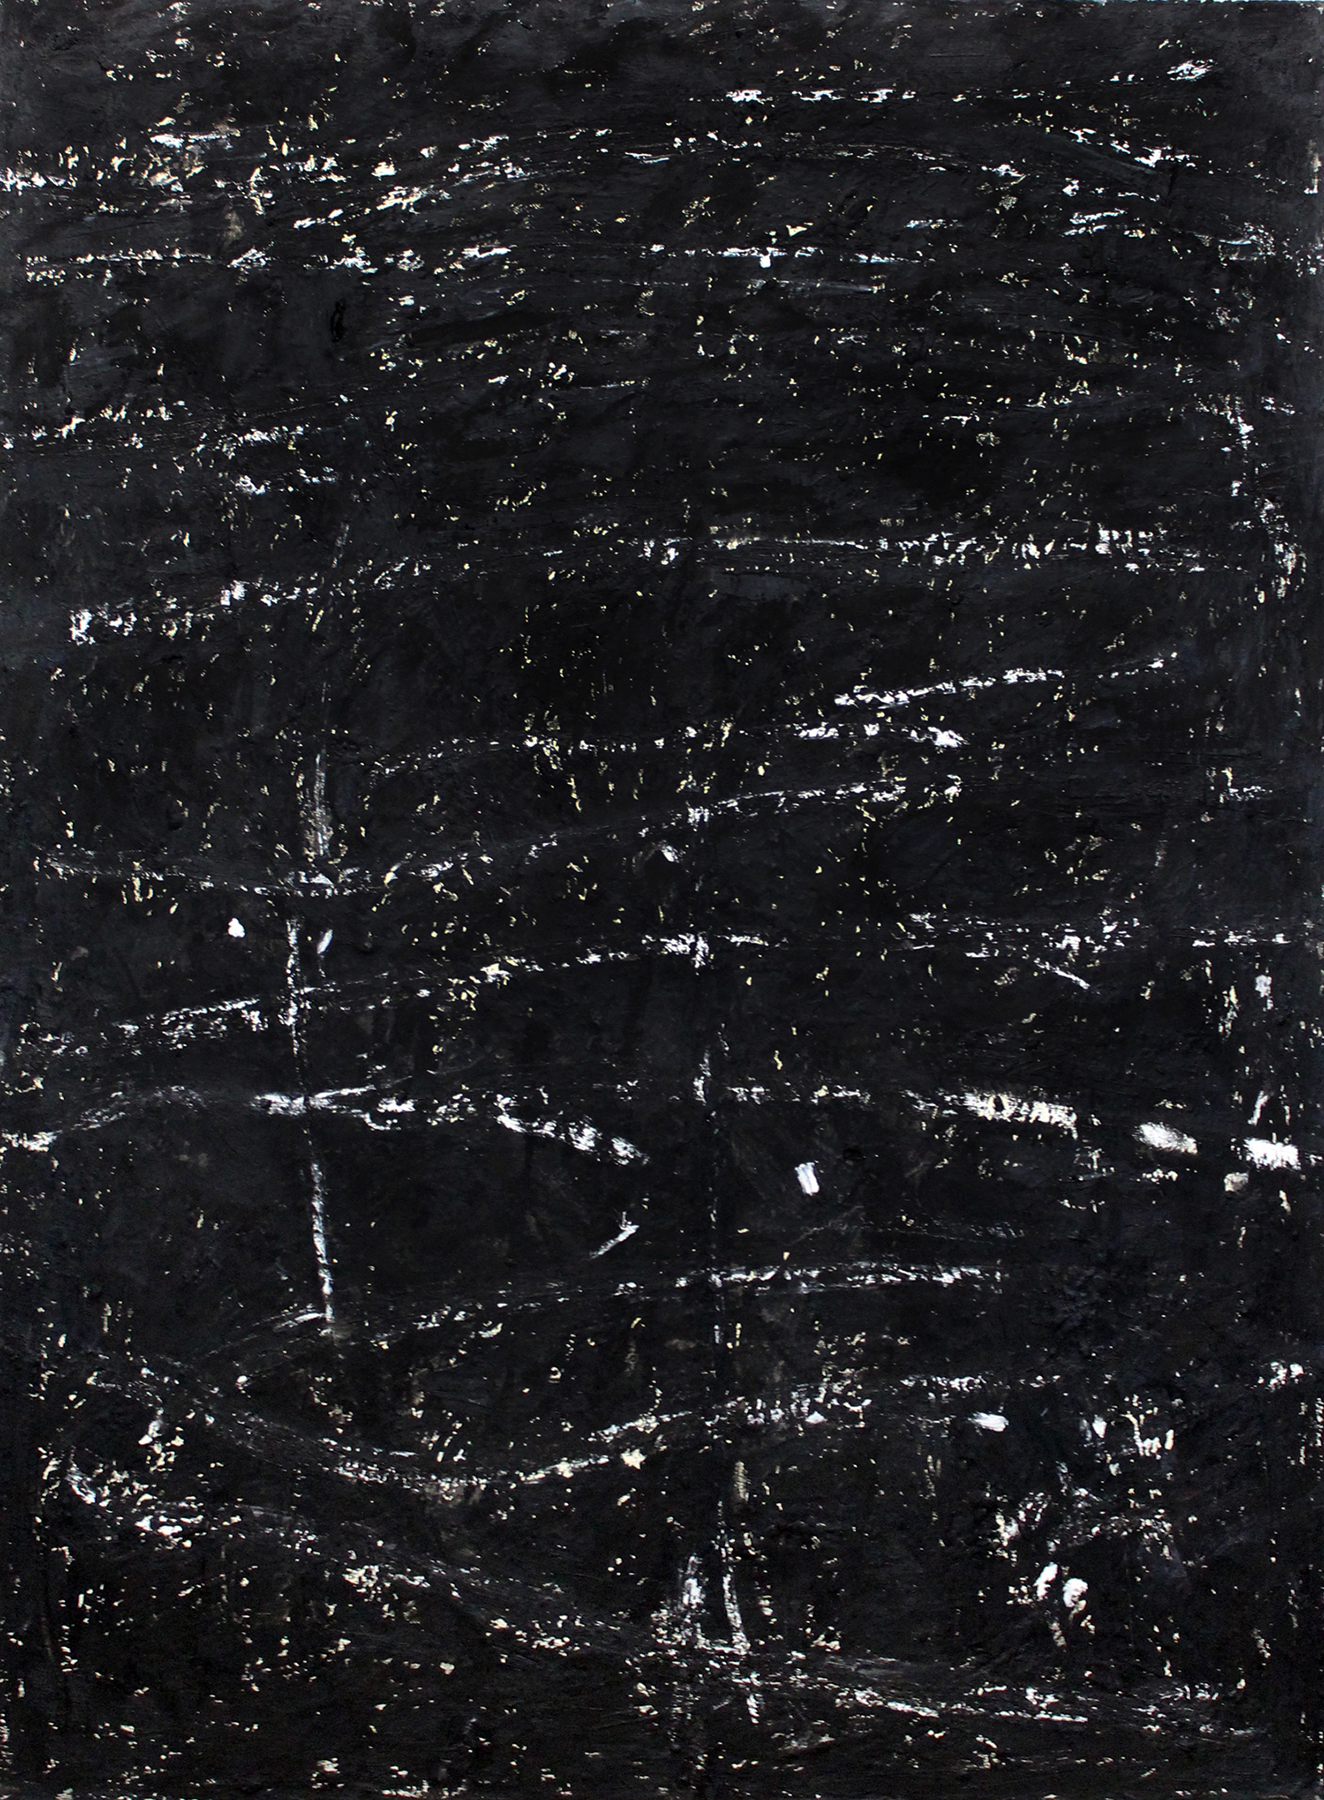   JOSEPH HART   Grace Notes II , 2015, oil on canvas, 40" x 30"   